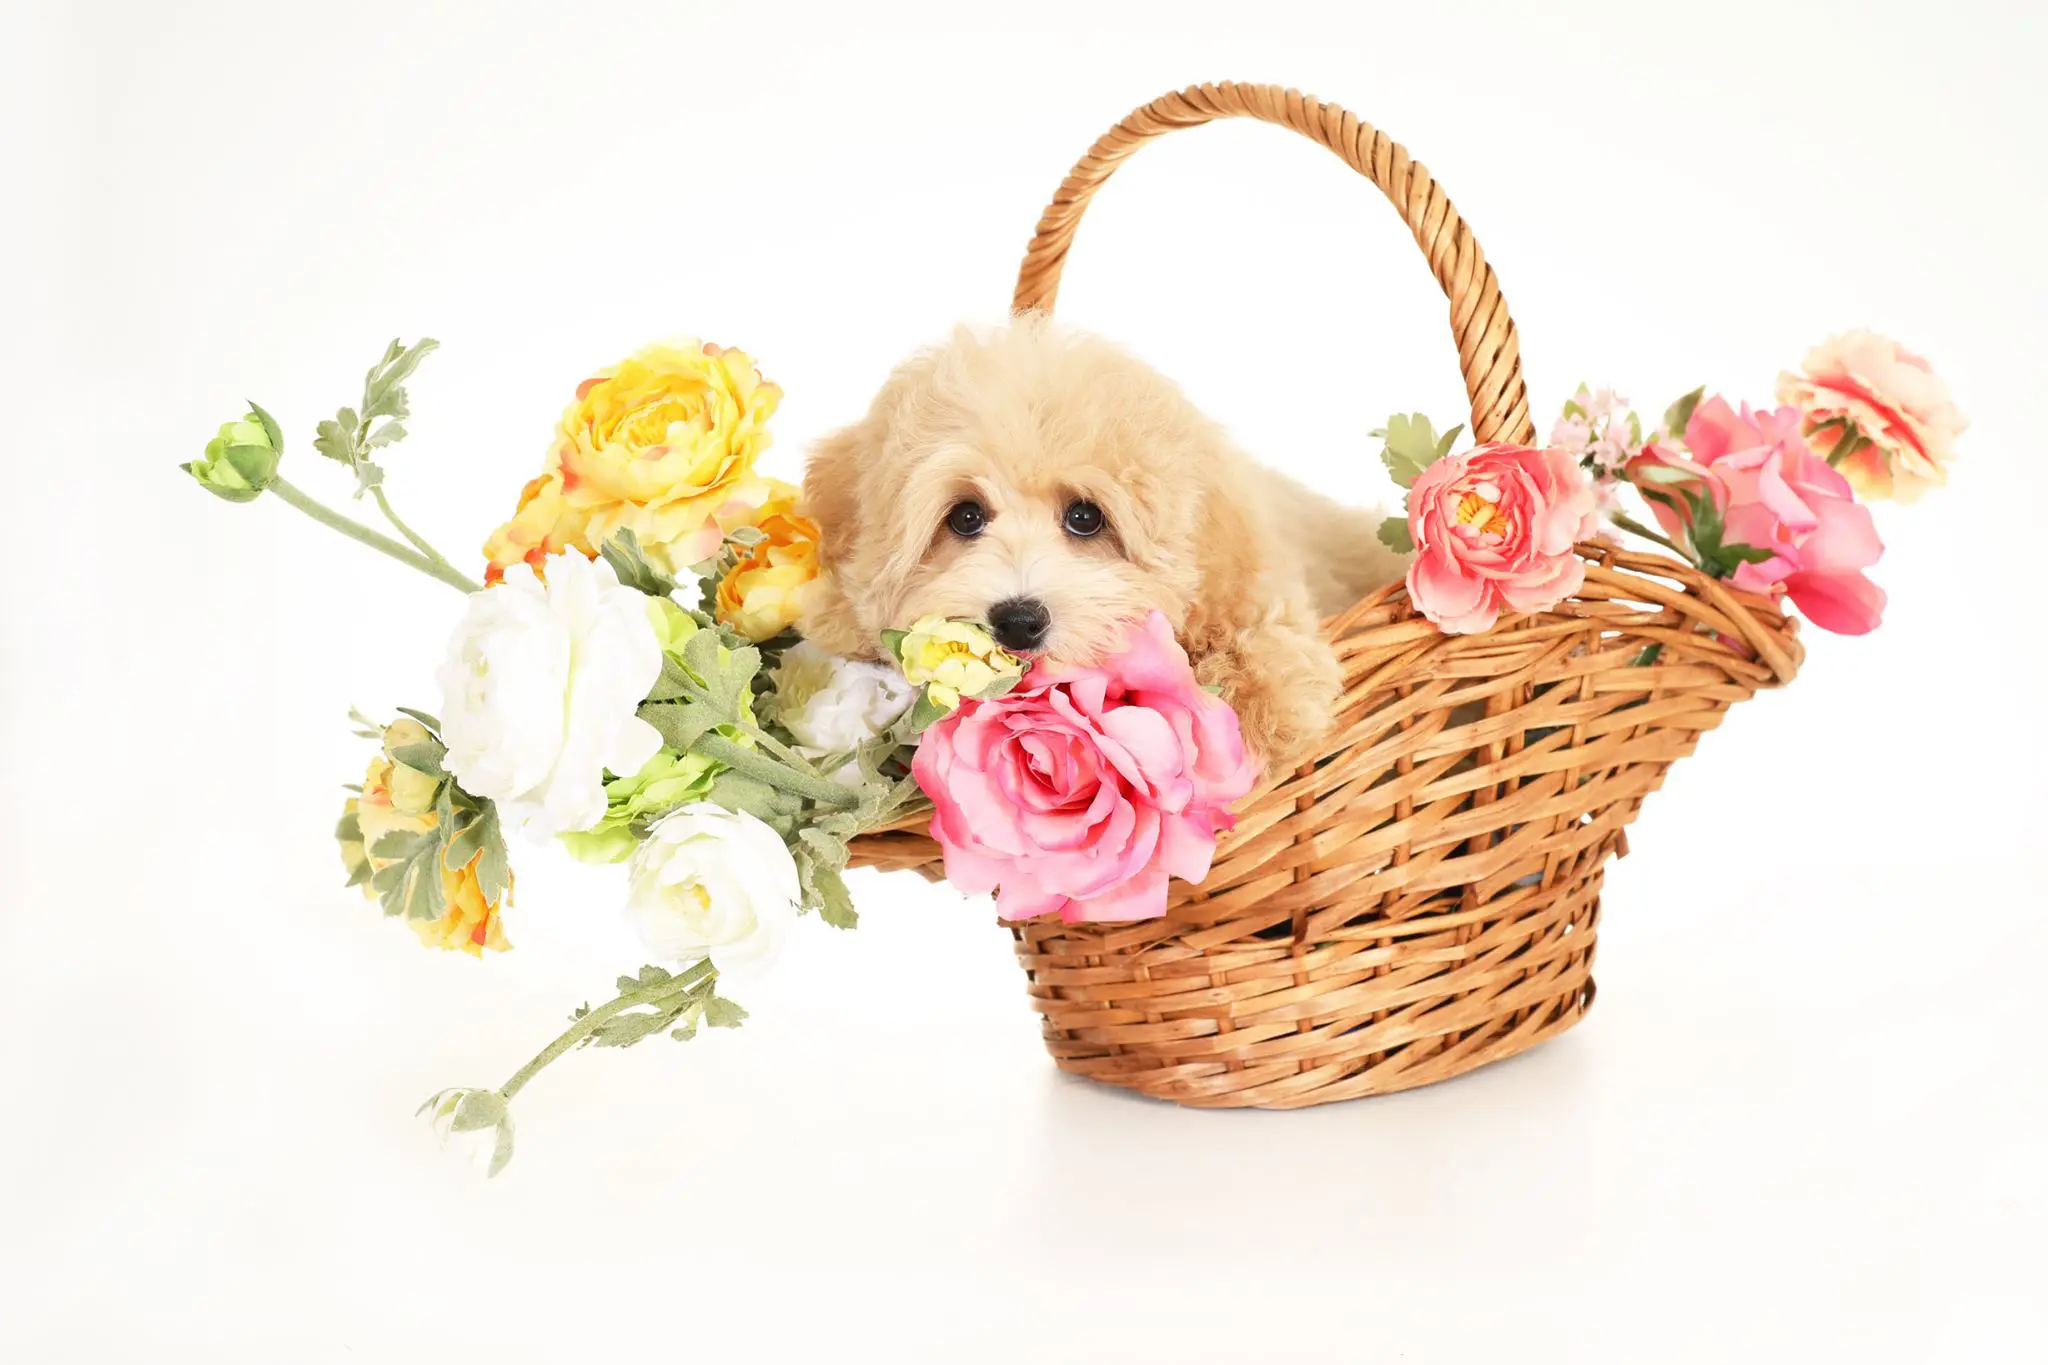 f1bb English teddybear golderndoodle puppy in wicker basket with flowers